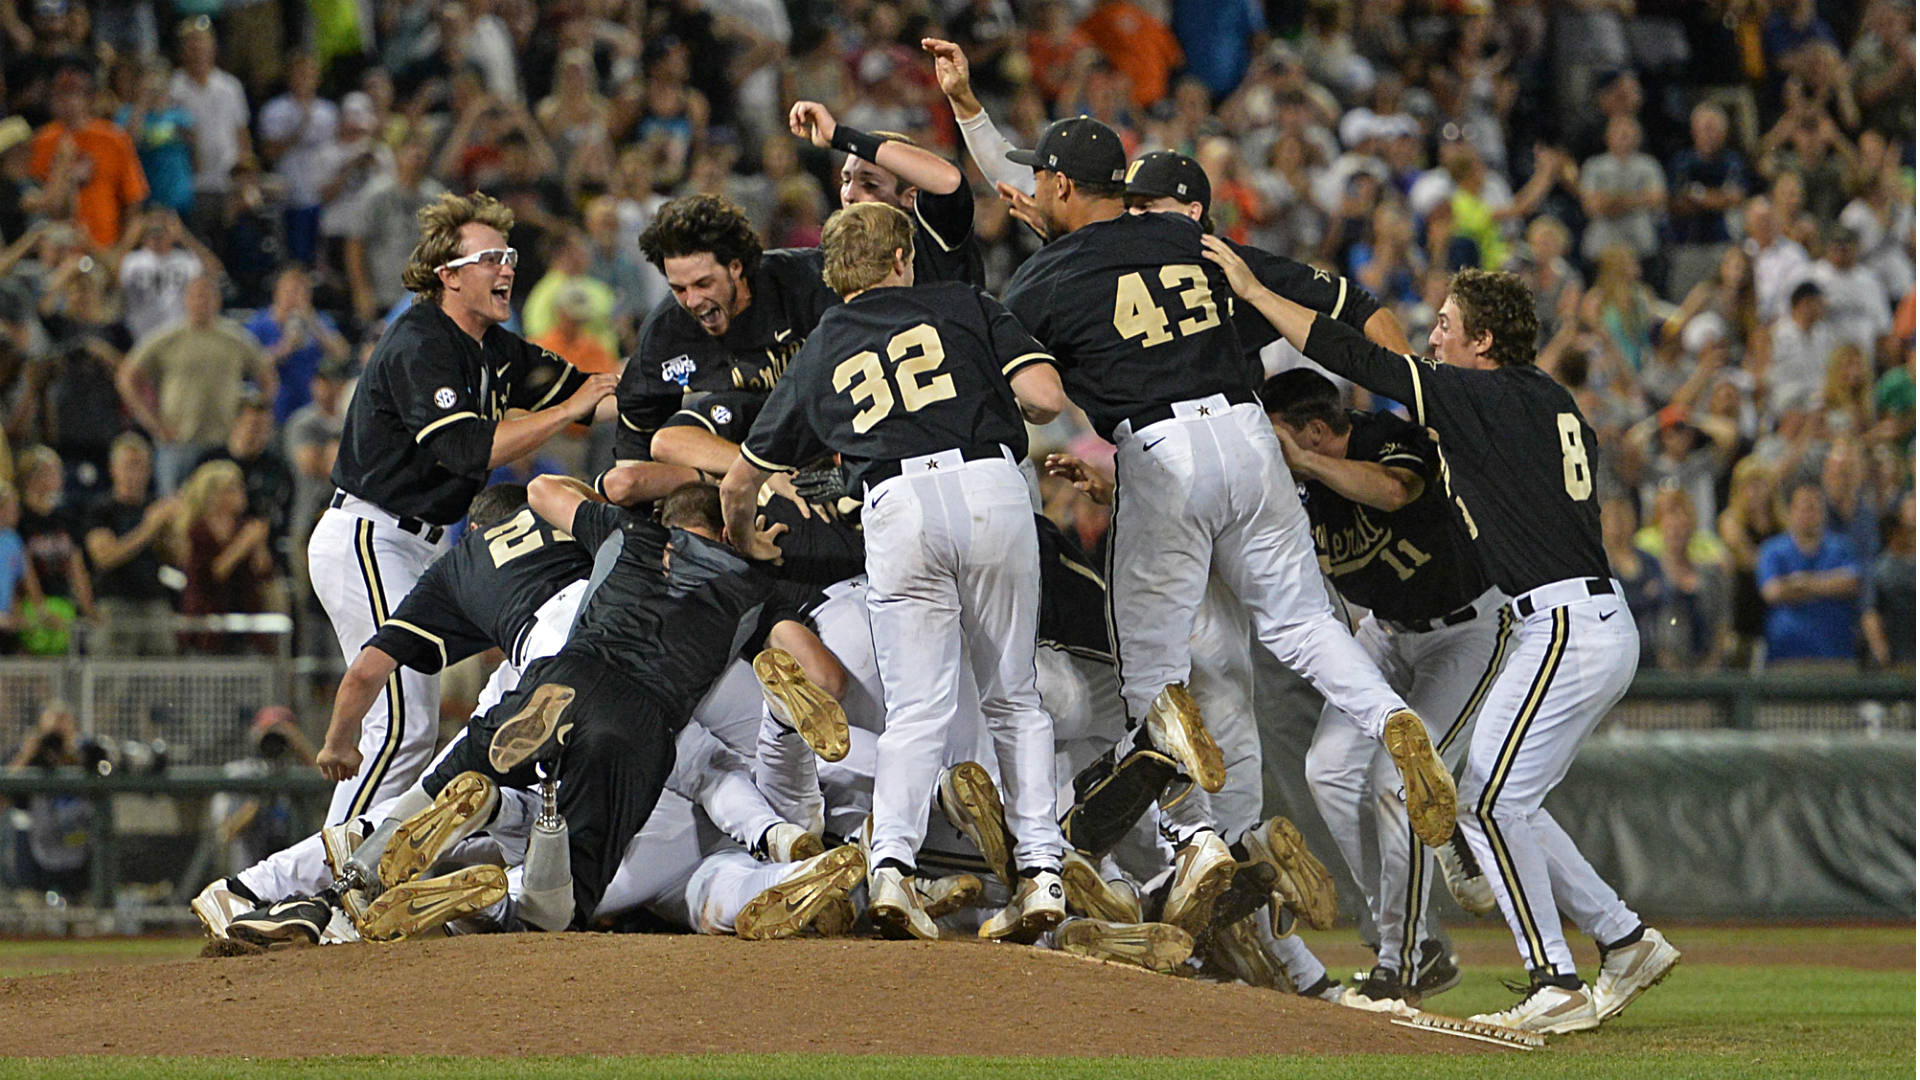 Vanderbilt's possible repeat tops list of college baseball stories to